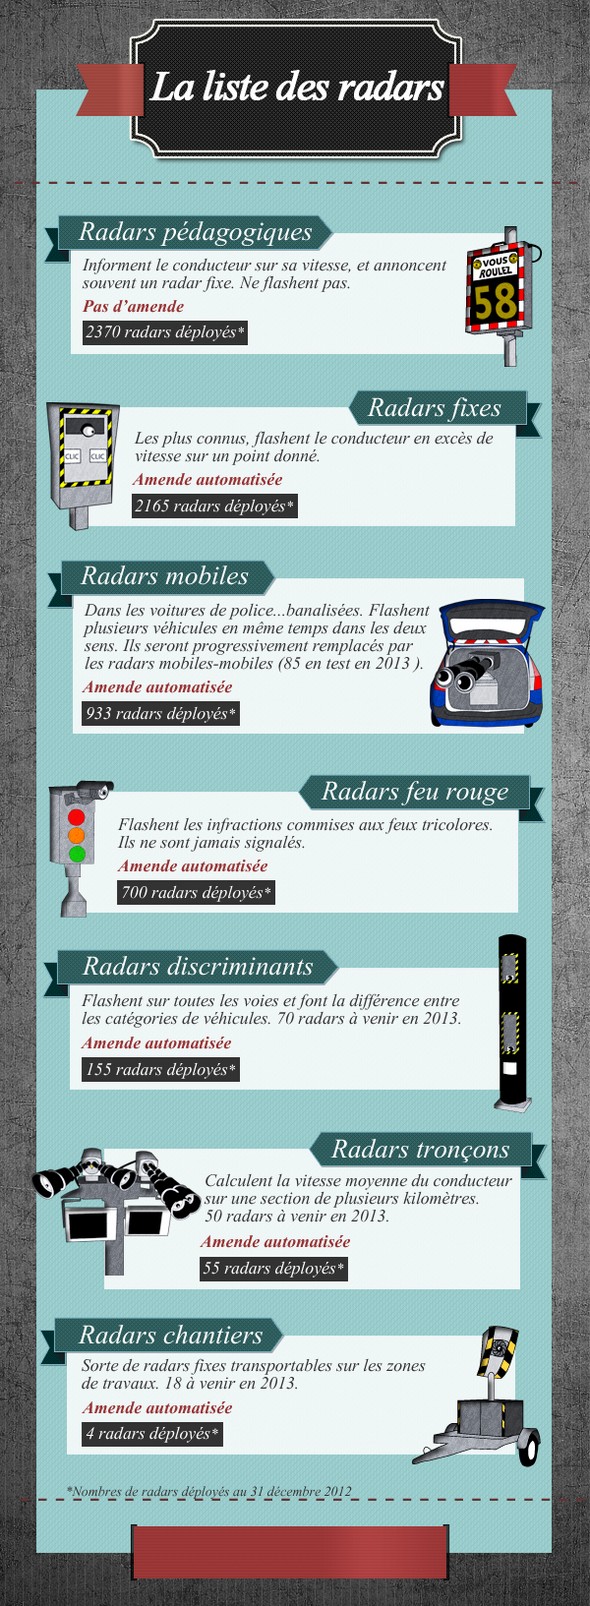 Infographie-Radars